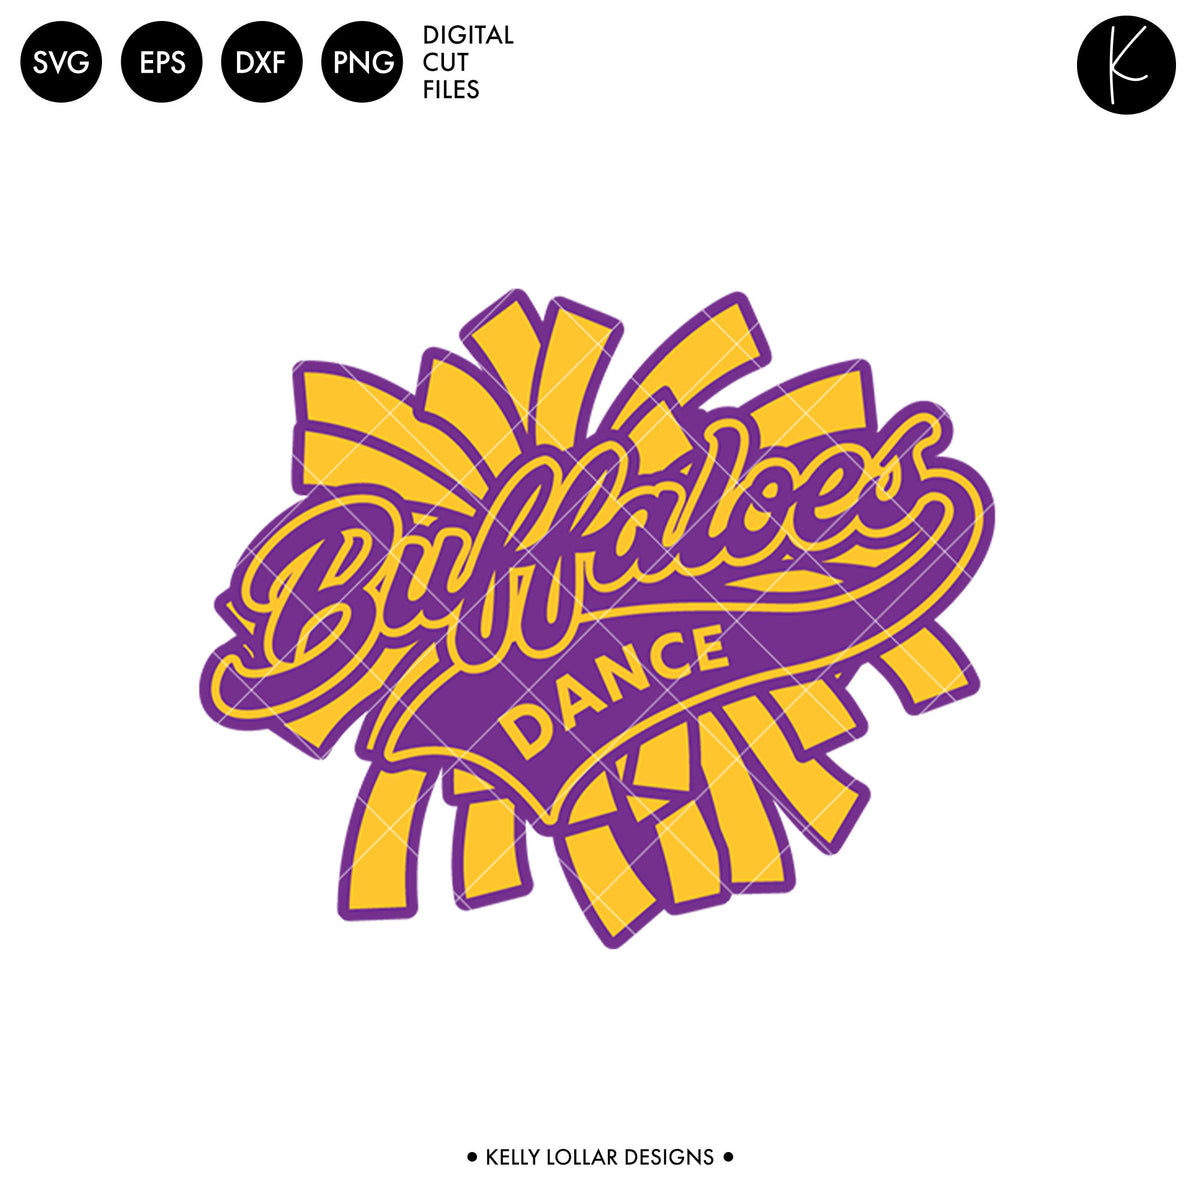 Buffaloes Dance Bundle | SVG DXF EPS PNG Cut Files